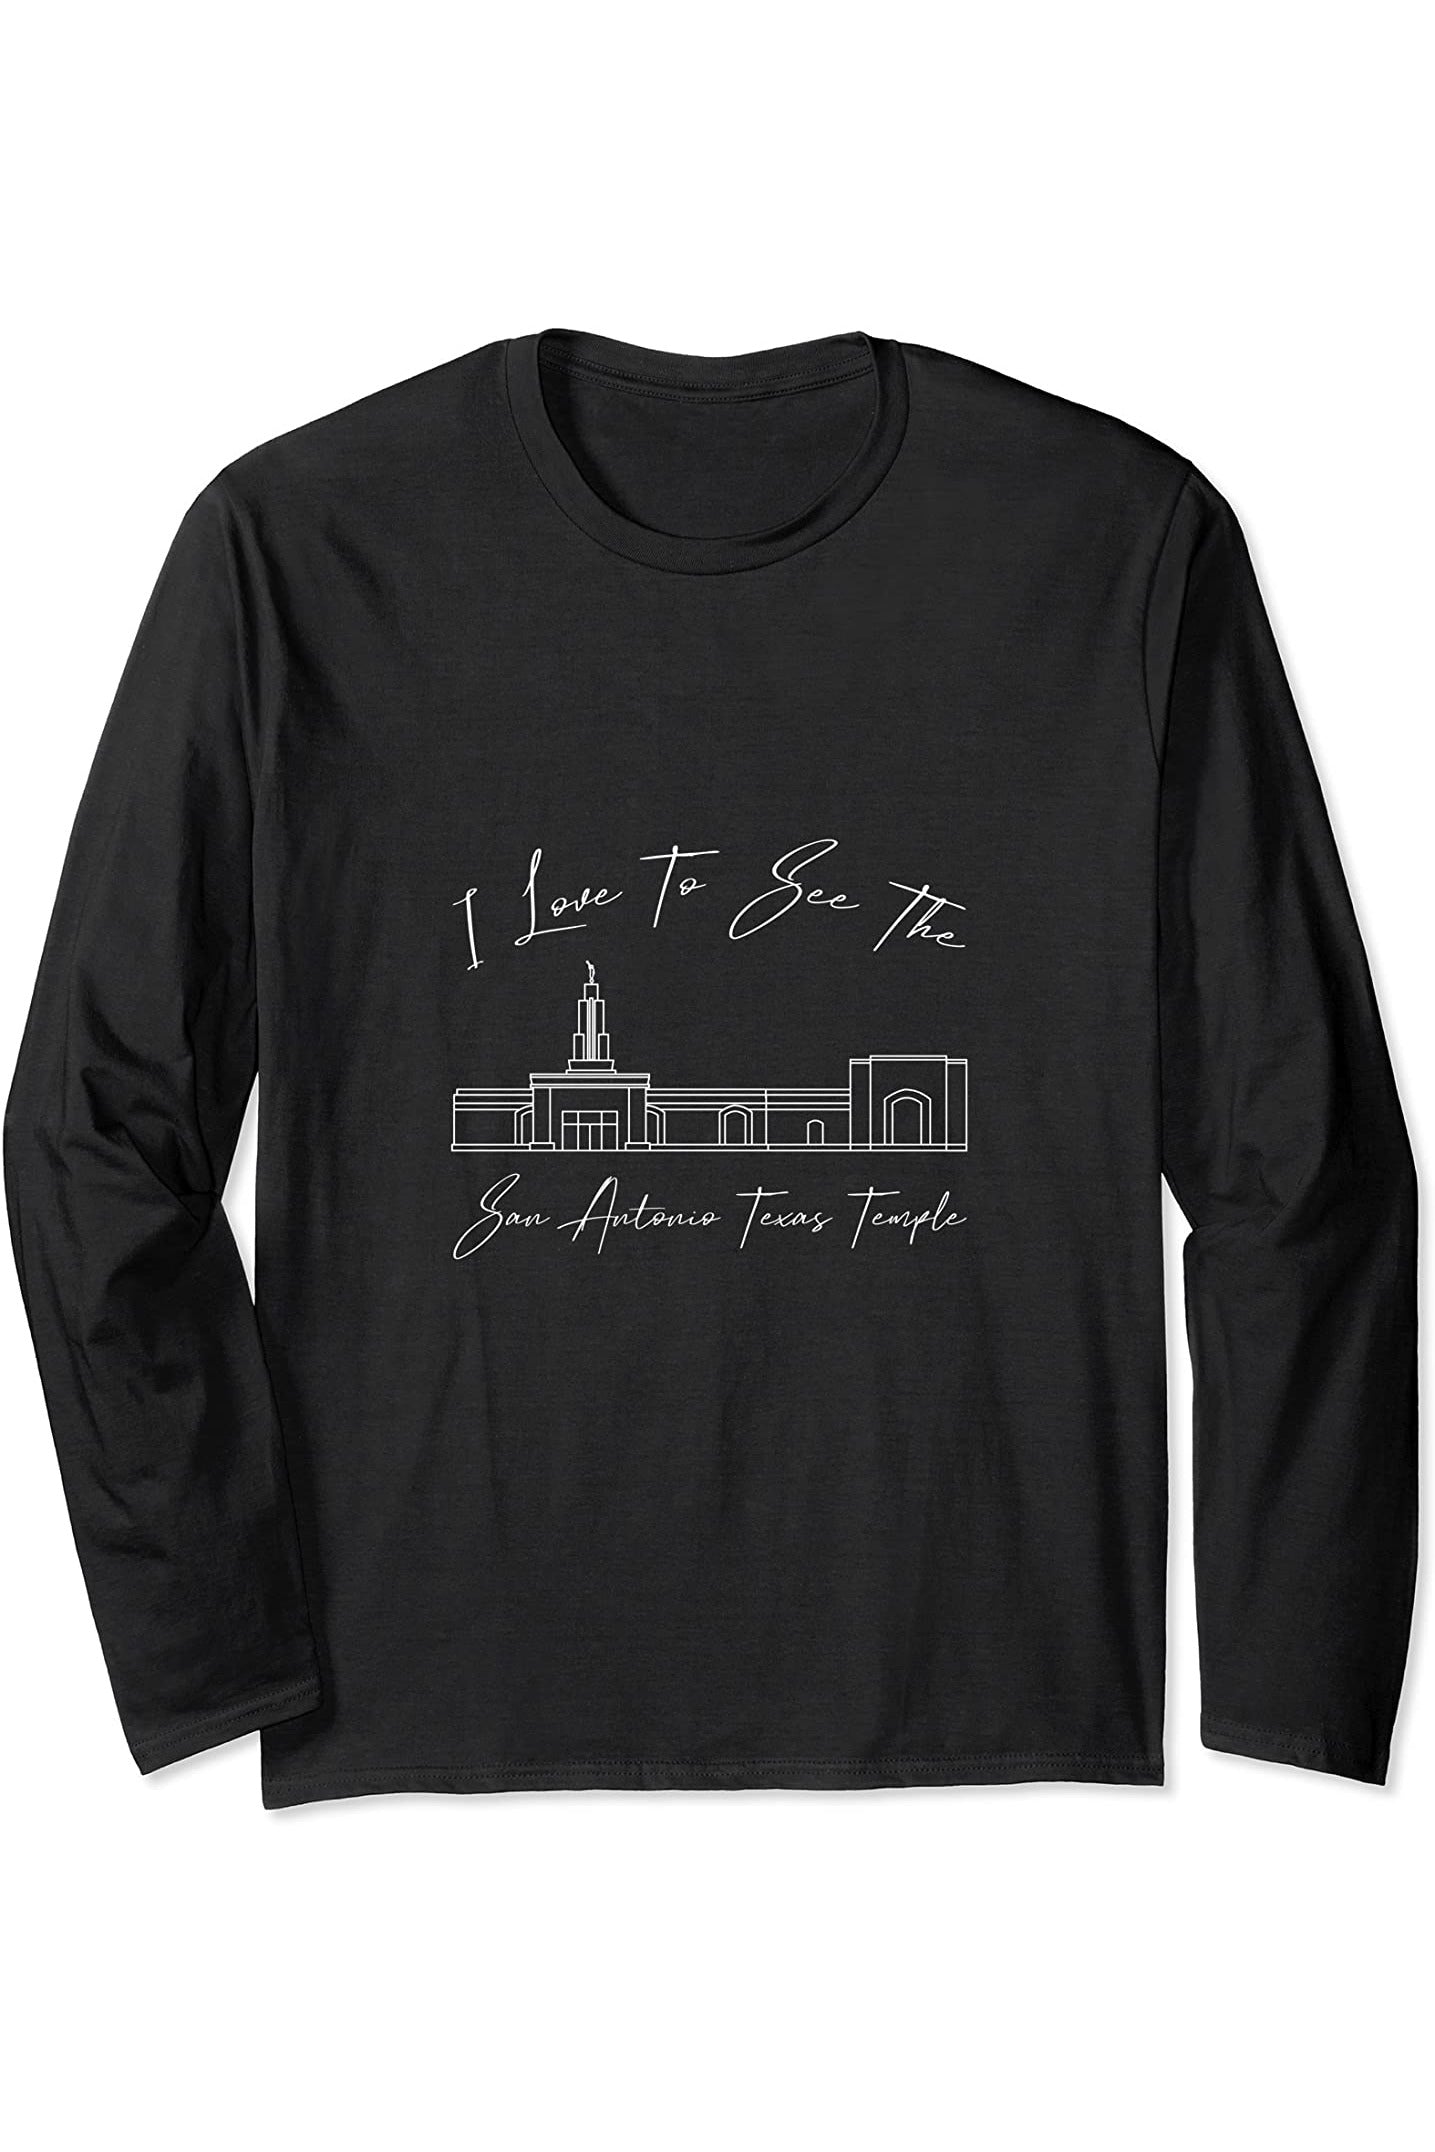 San Antonio Texas Temple Long Sleeve T-Shirt - Calligraphy Style (English) US